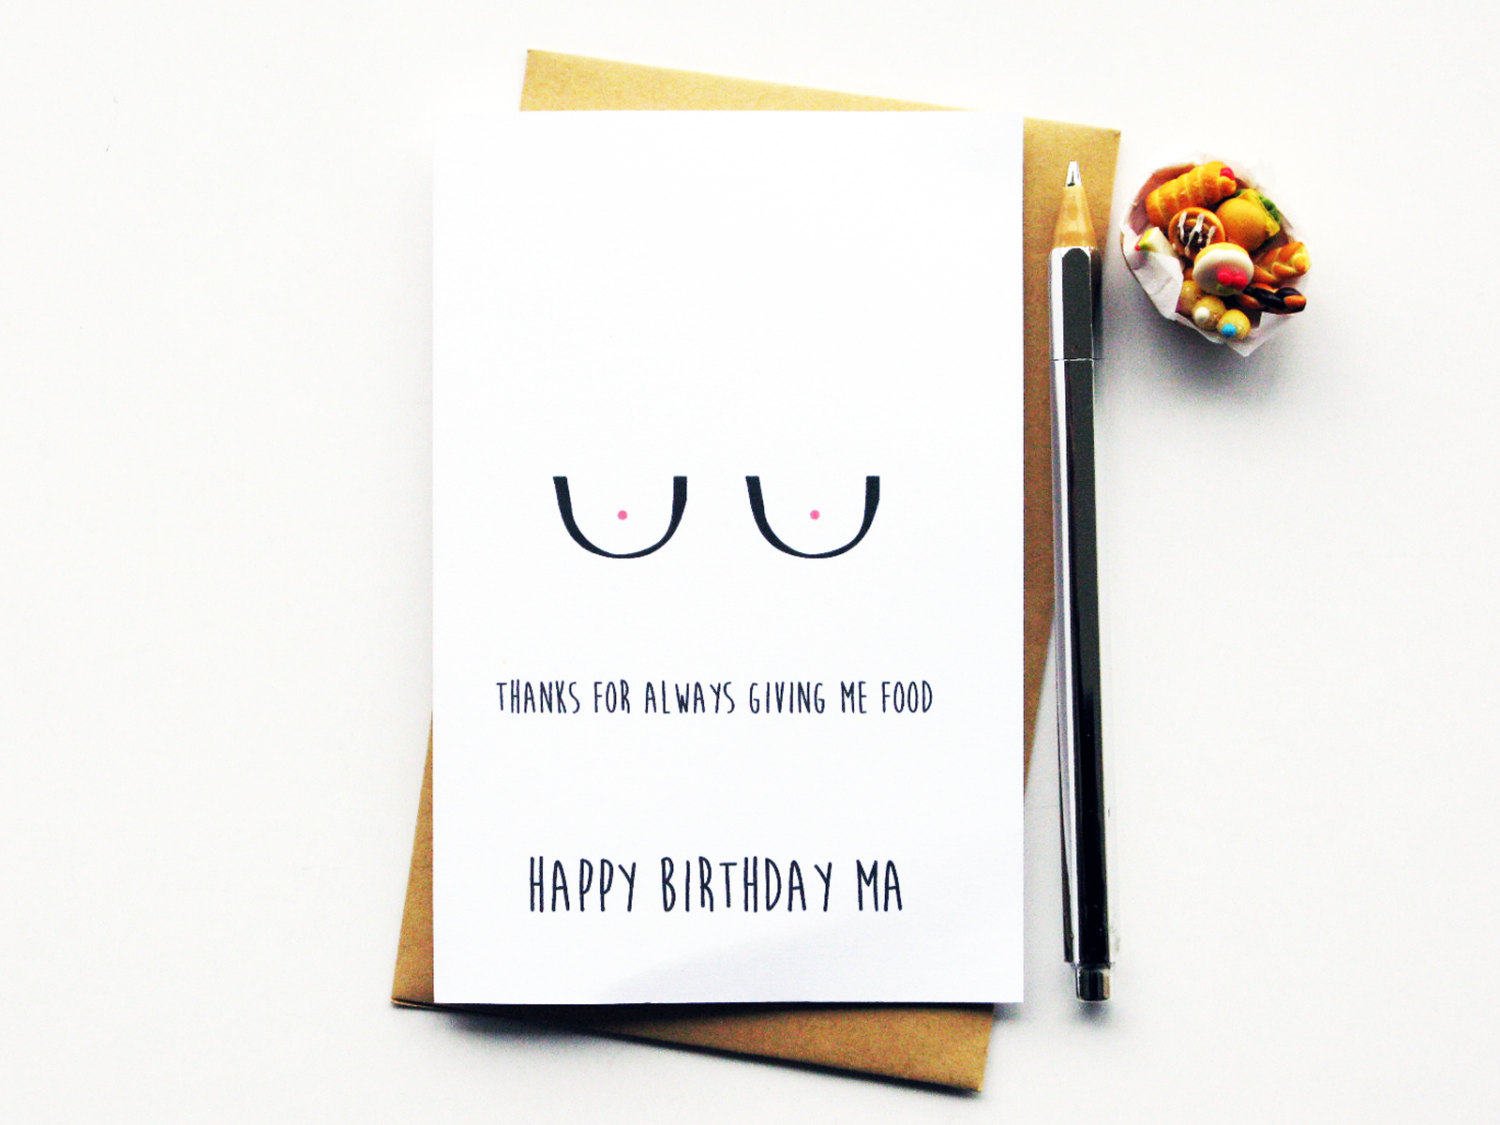 Cool Card Ideas For Birthdays 95 Birthday Cards Ideas For Grandmas Birthday Card Sayings For